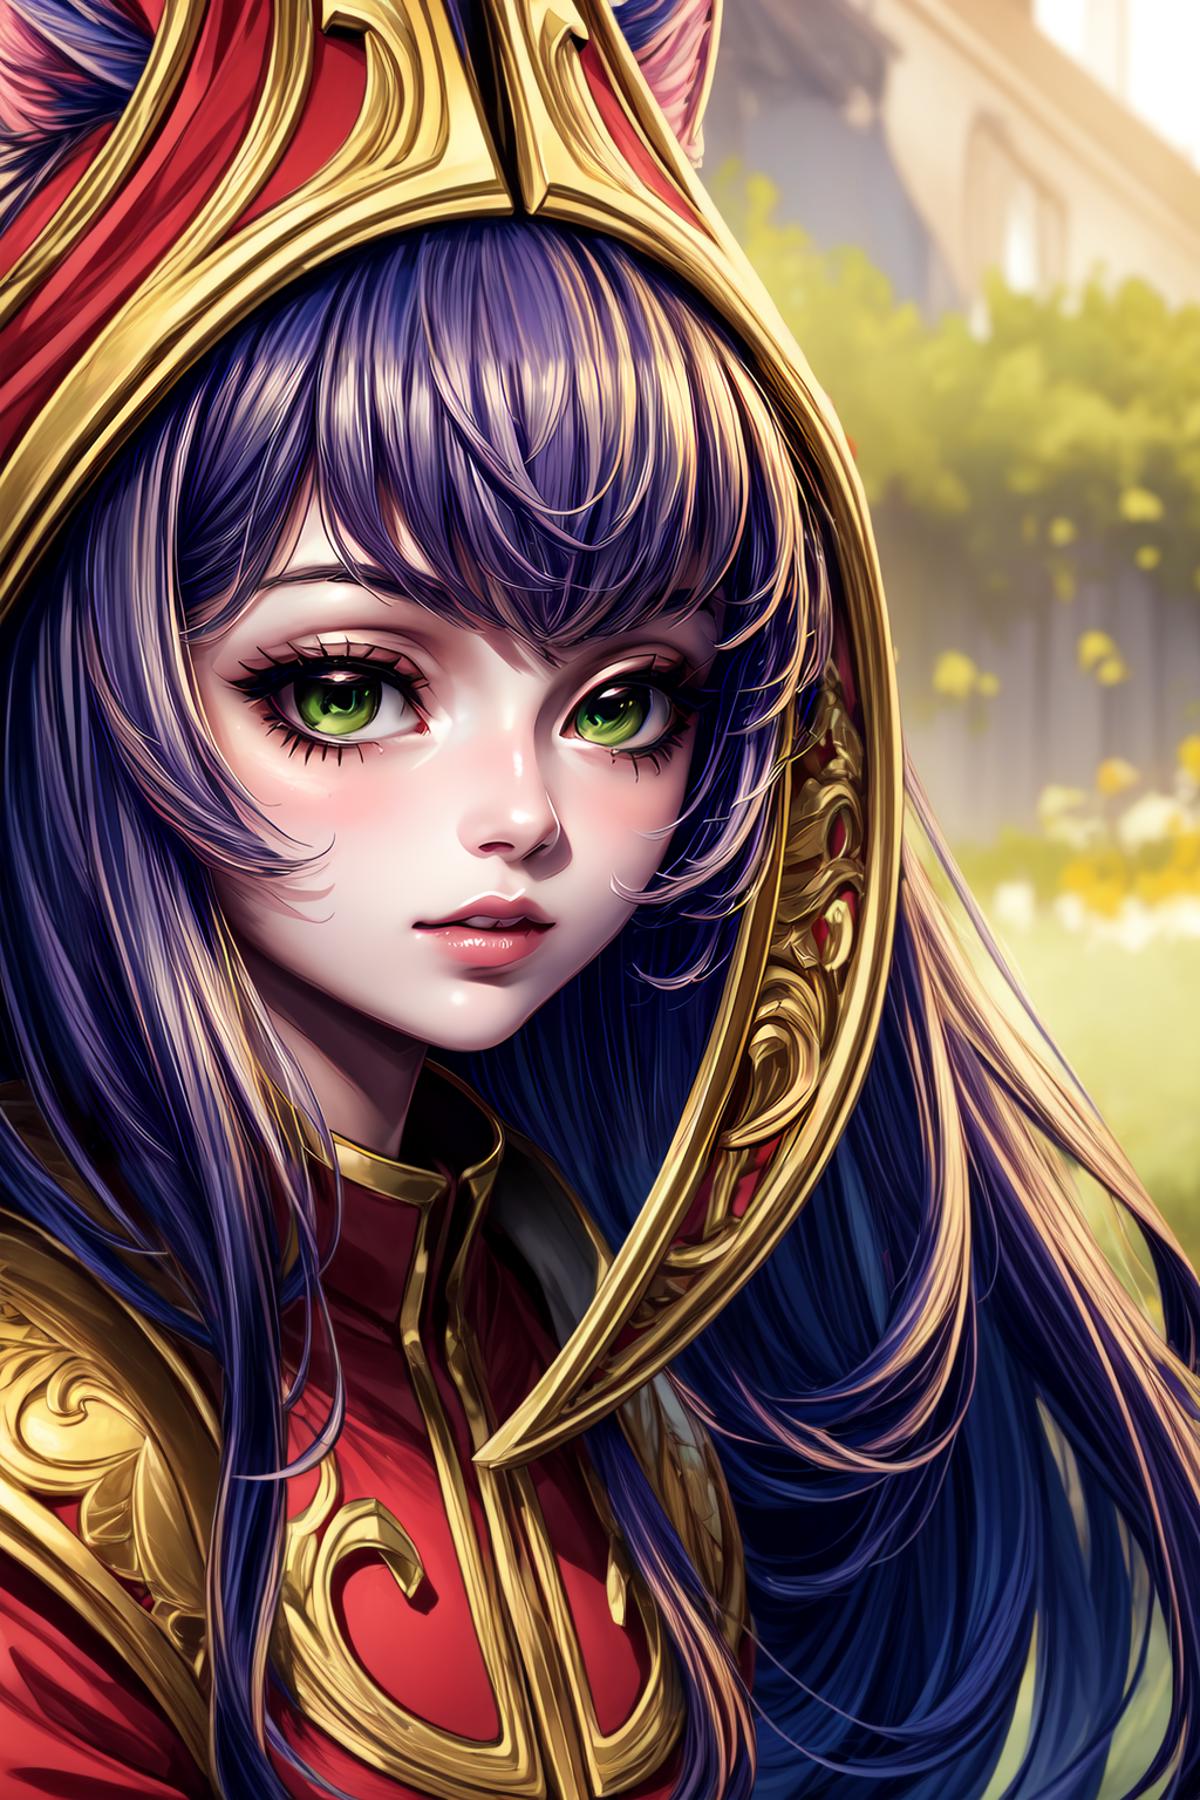 Lulu the Fae Sorceress | League of Legends | LoRa image by PettankoPaizuri